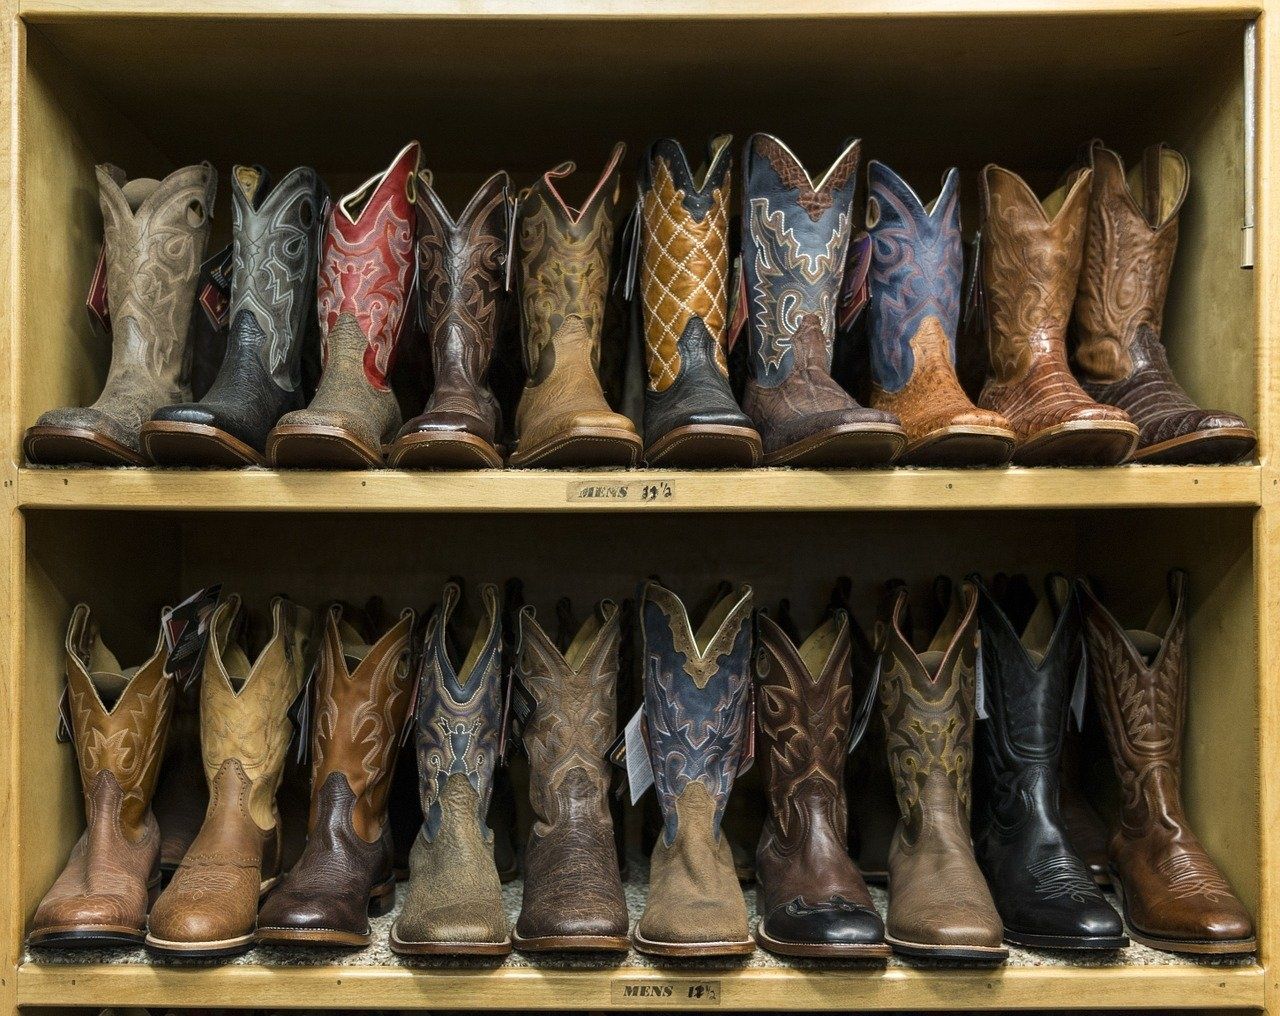 saddle soap on cowboy boots